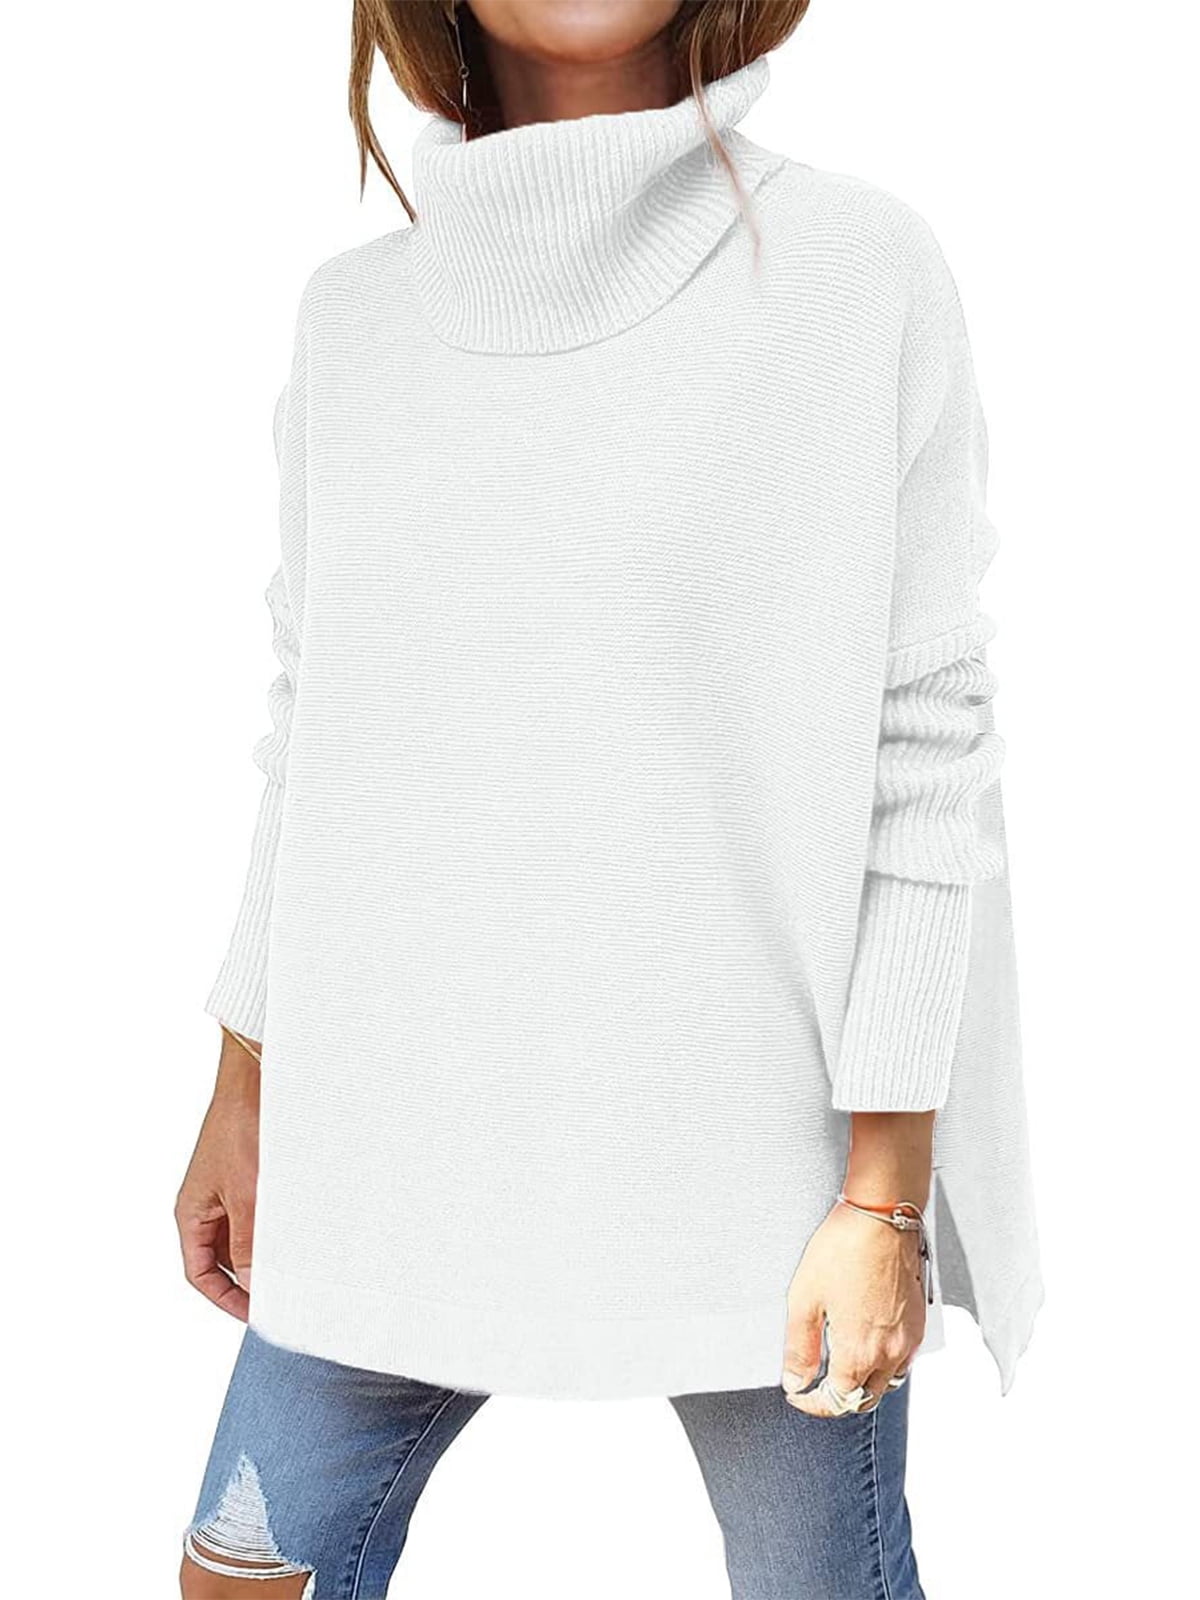 Sanmadrola Oversized Turtleneck Sweaters for Women 2023 Fall